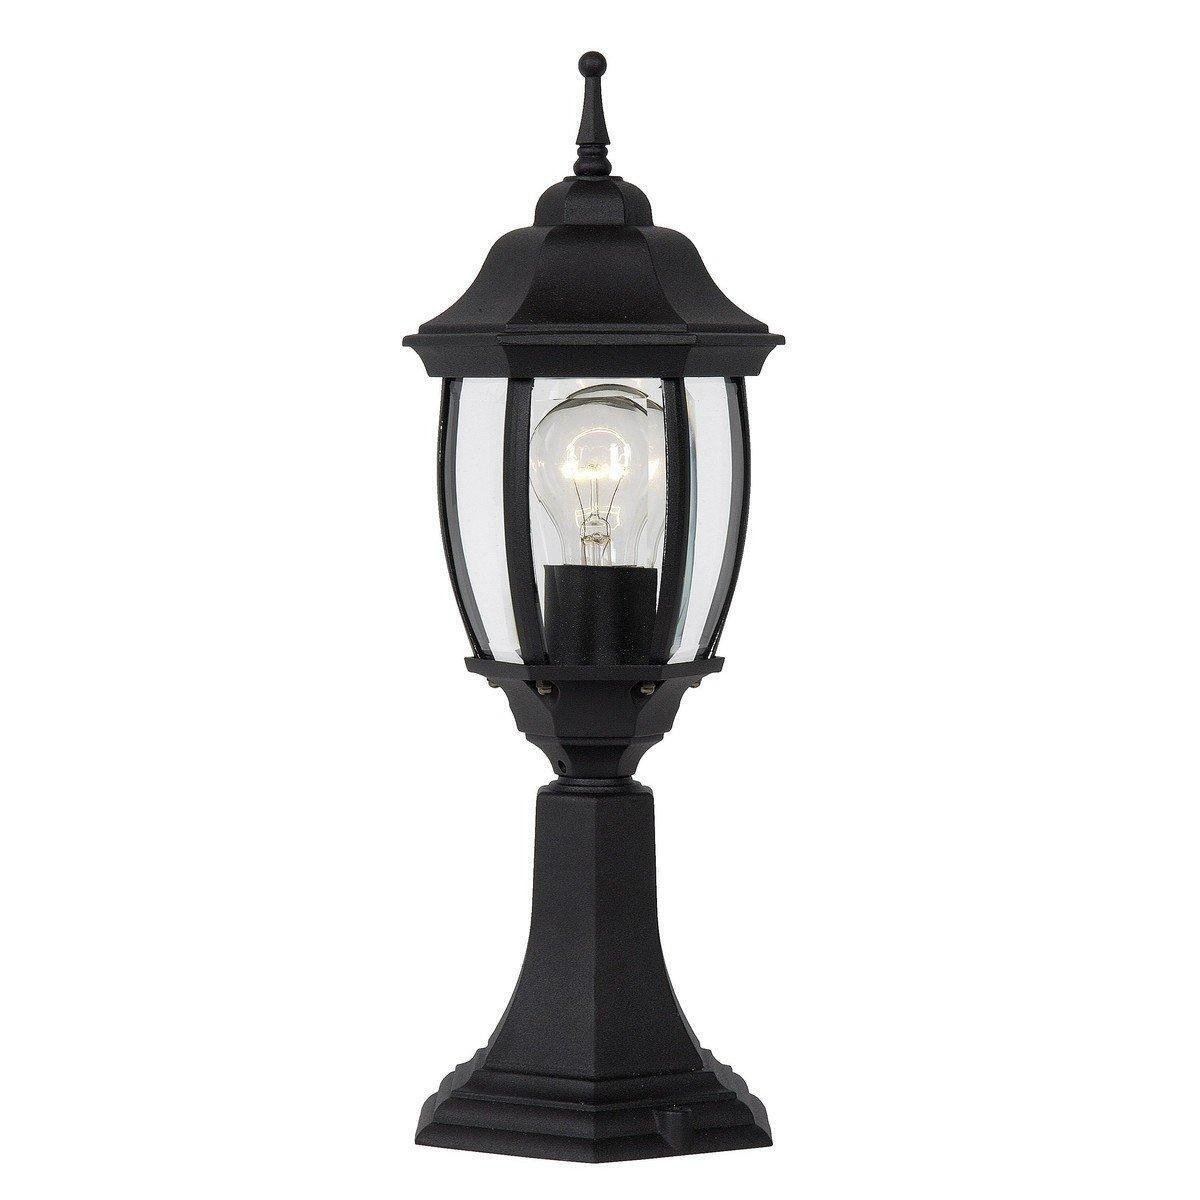 'TIRENO' Dimmable Stylish Decorative Outdoor Bollard Lamp Post 1xE27 - image 1